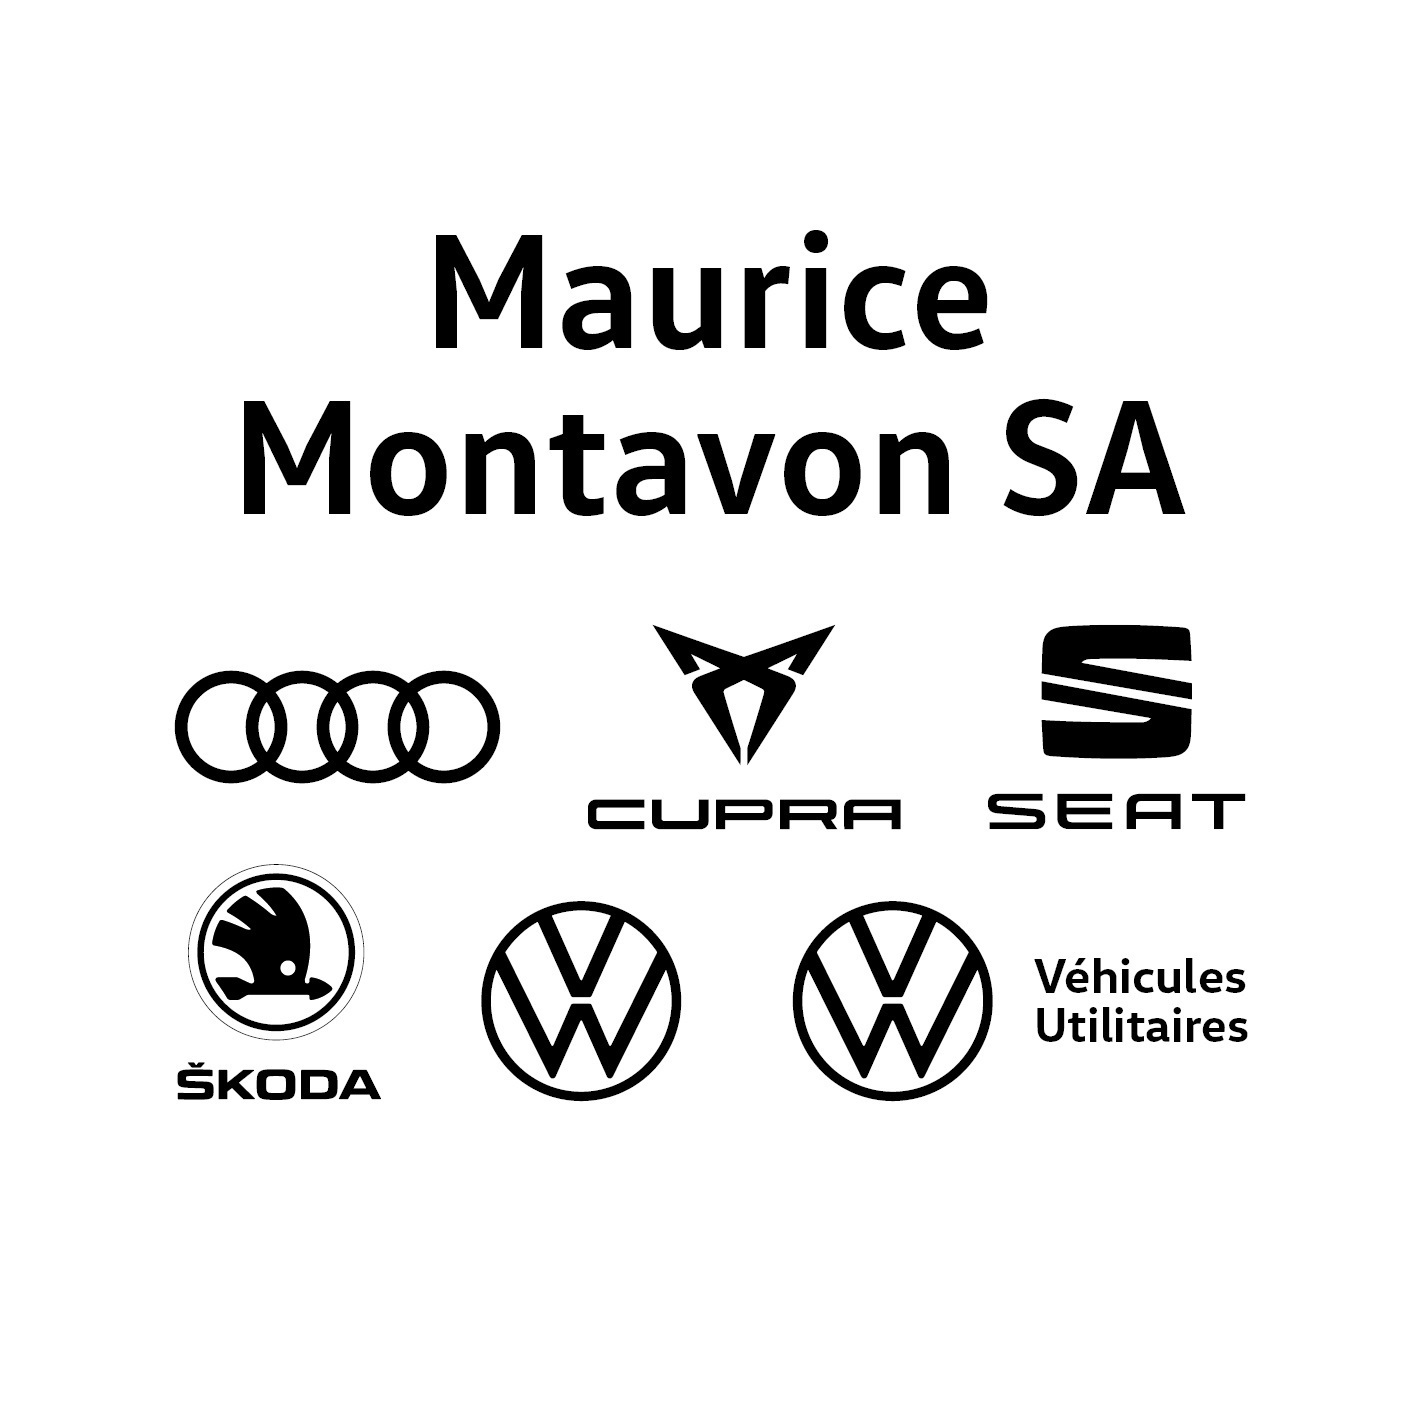 Maurice Montavon SA